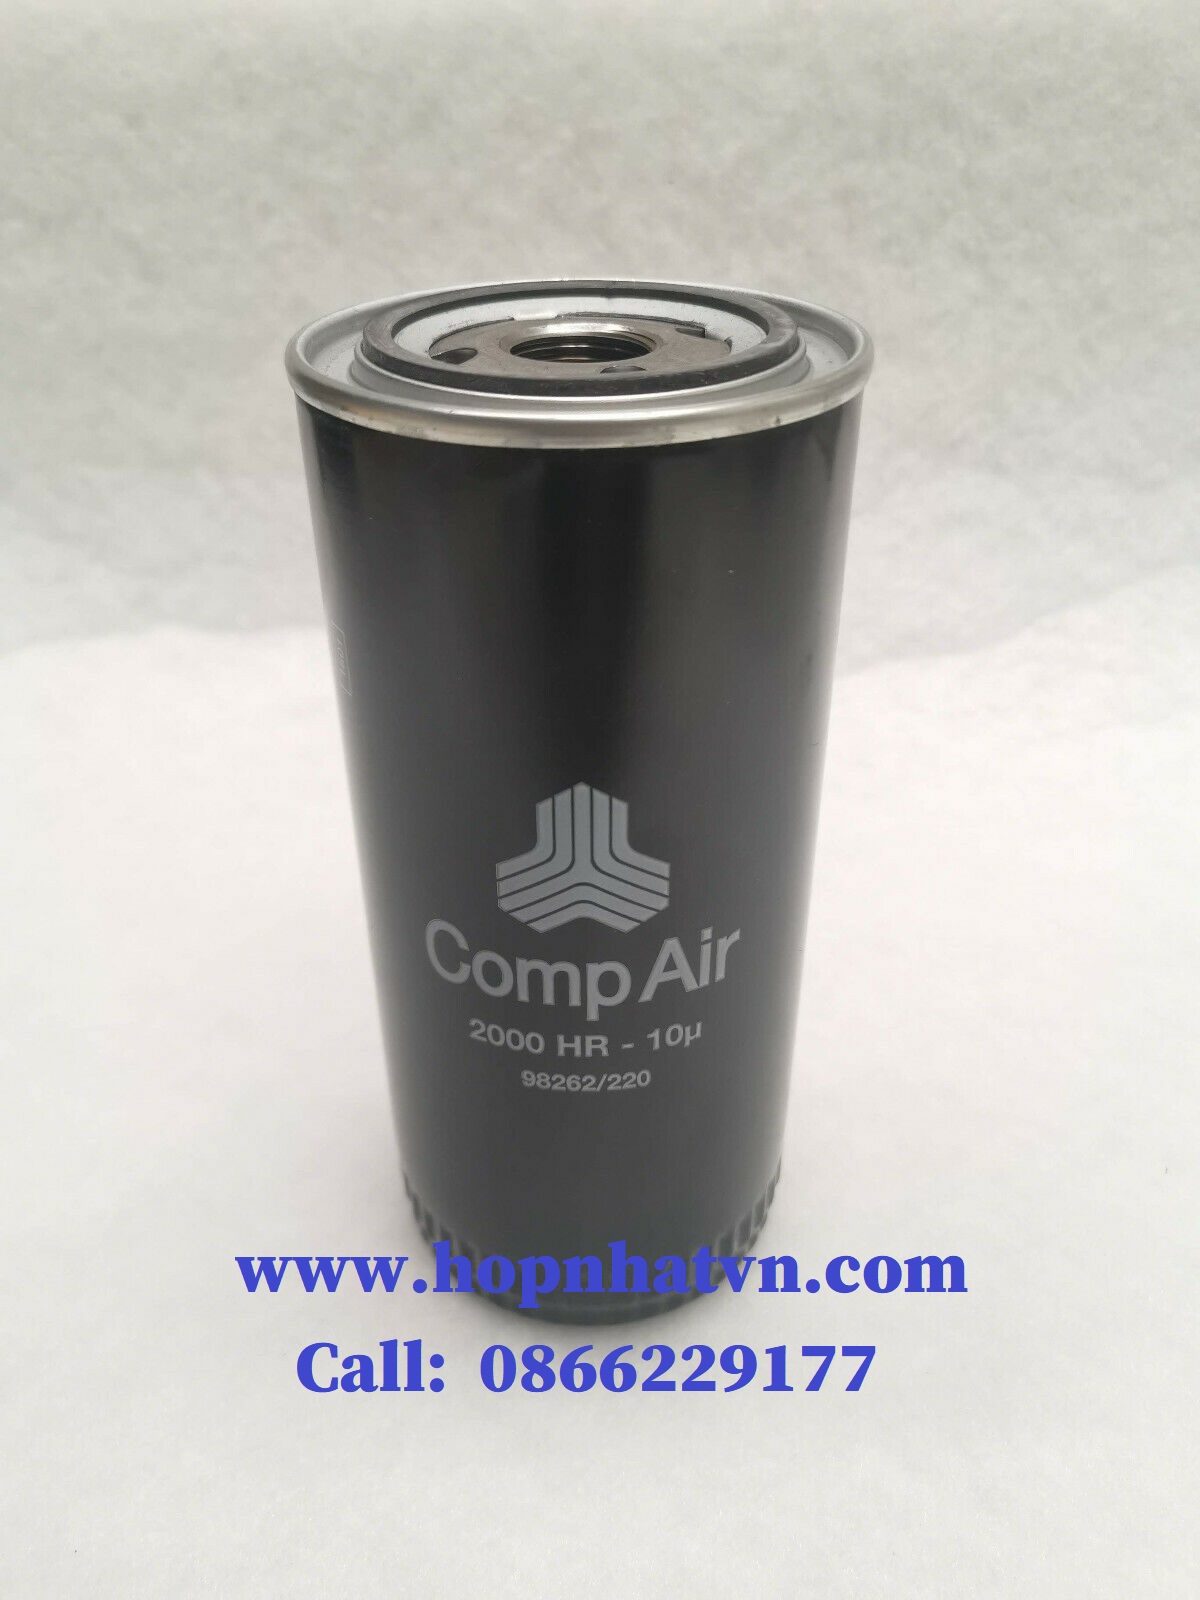 Oil Filter / Lọc dầu C11158.1053, C 11158-1053, SH 8147